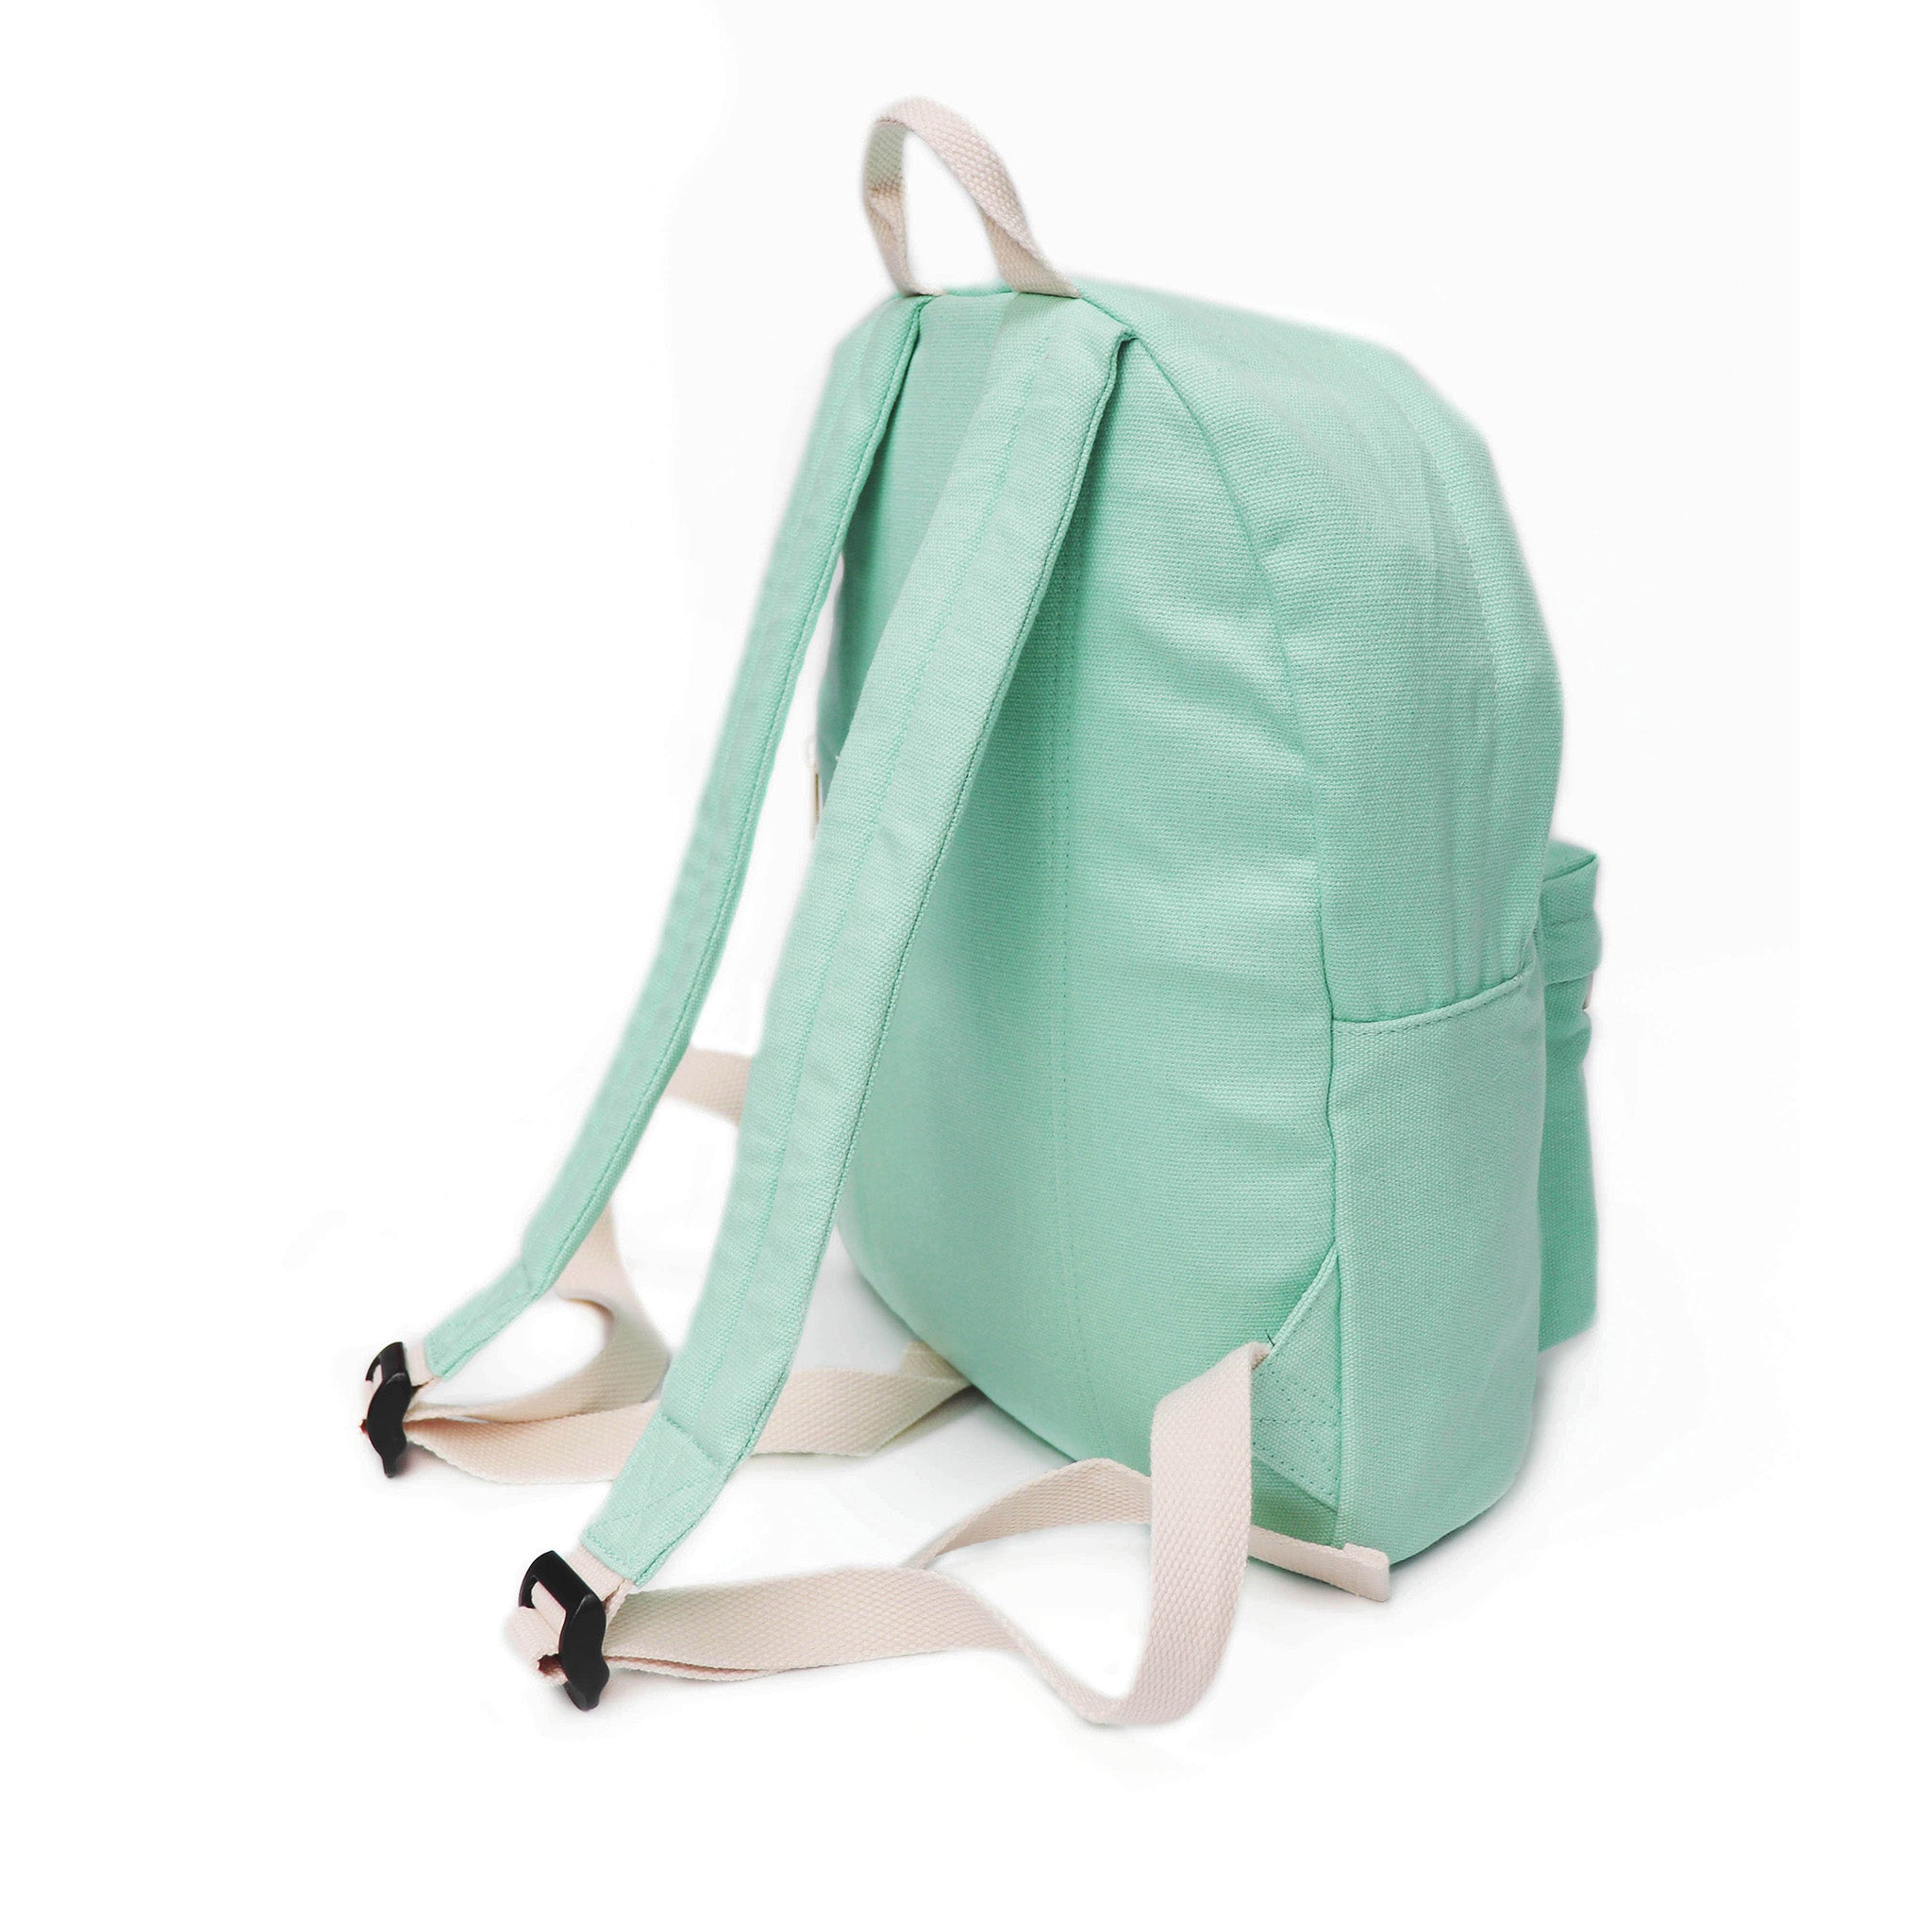 Pantone Small Backpack